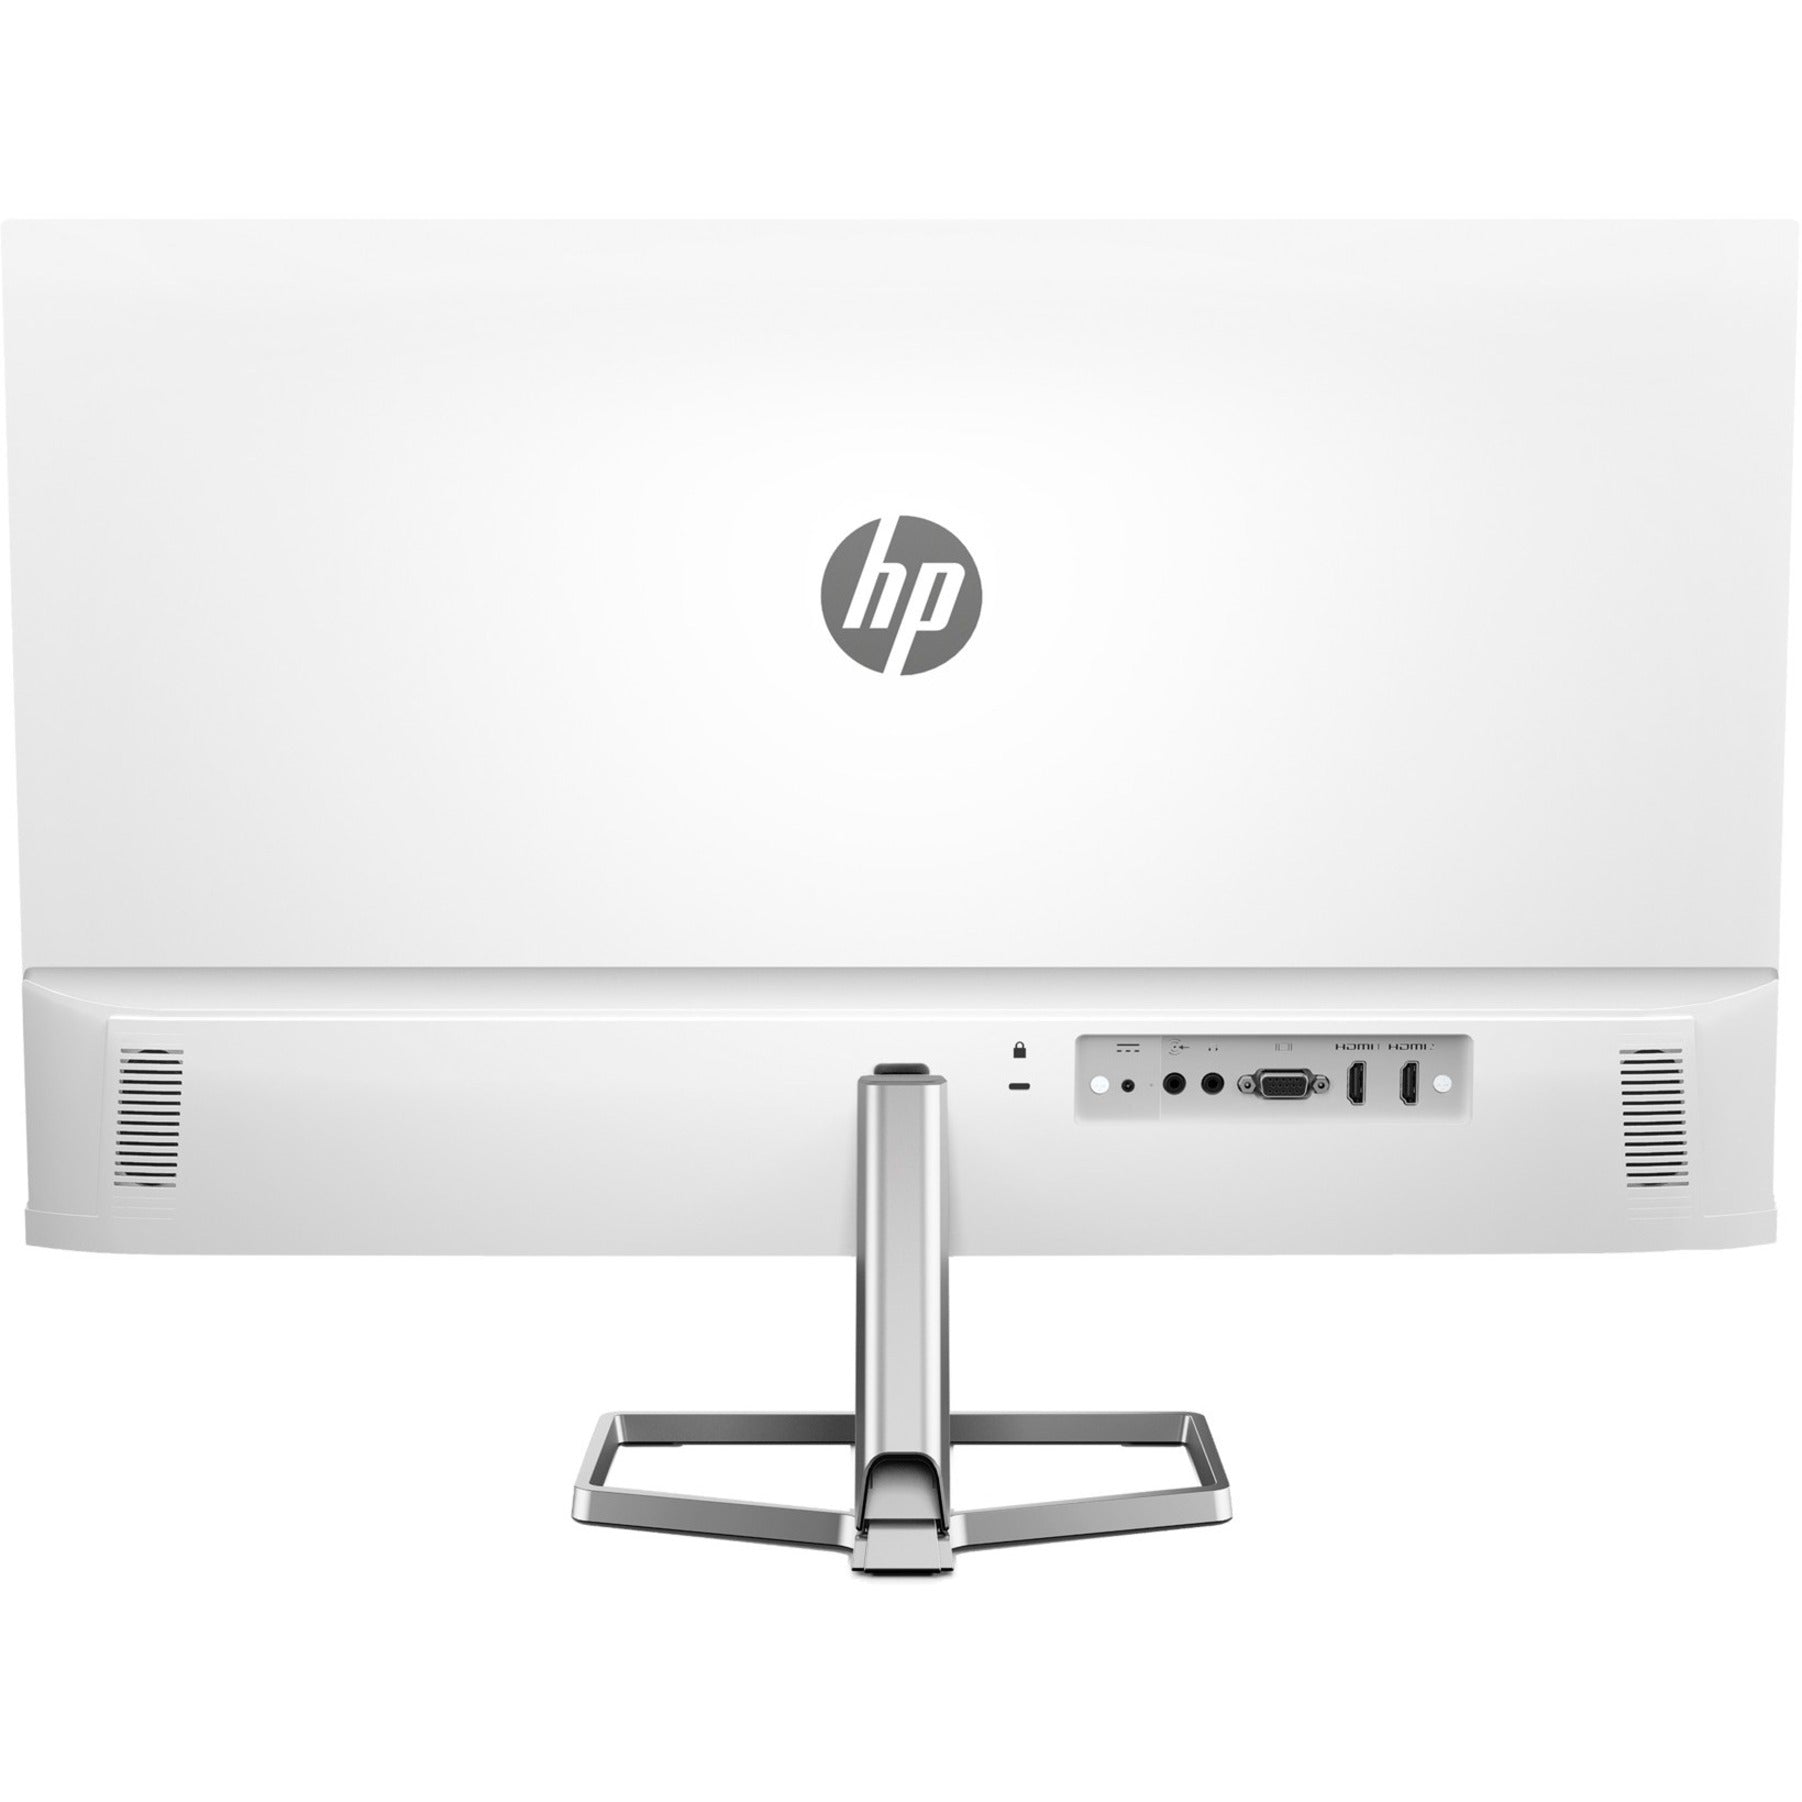 HP M27fwa FHD Monitor, 27-in IPS LED Backlit, 300 Nit Brightness, 99% sRGB Color Gamut, 1920 x 1080 Resolution, 1,000:1 Contrast Ratio, FreeSync, 1 Year Warranty